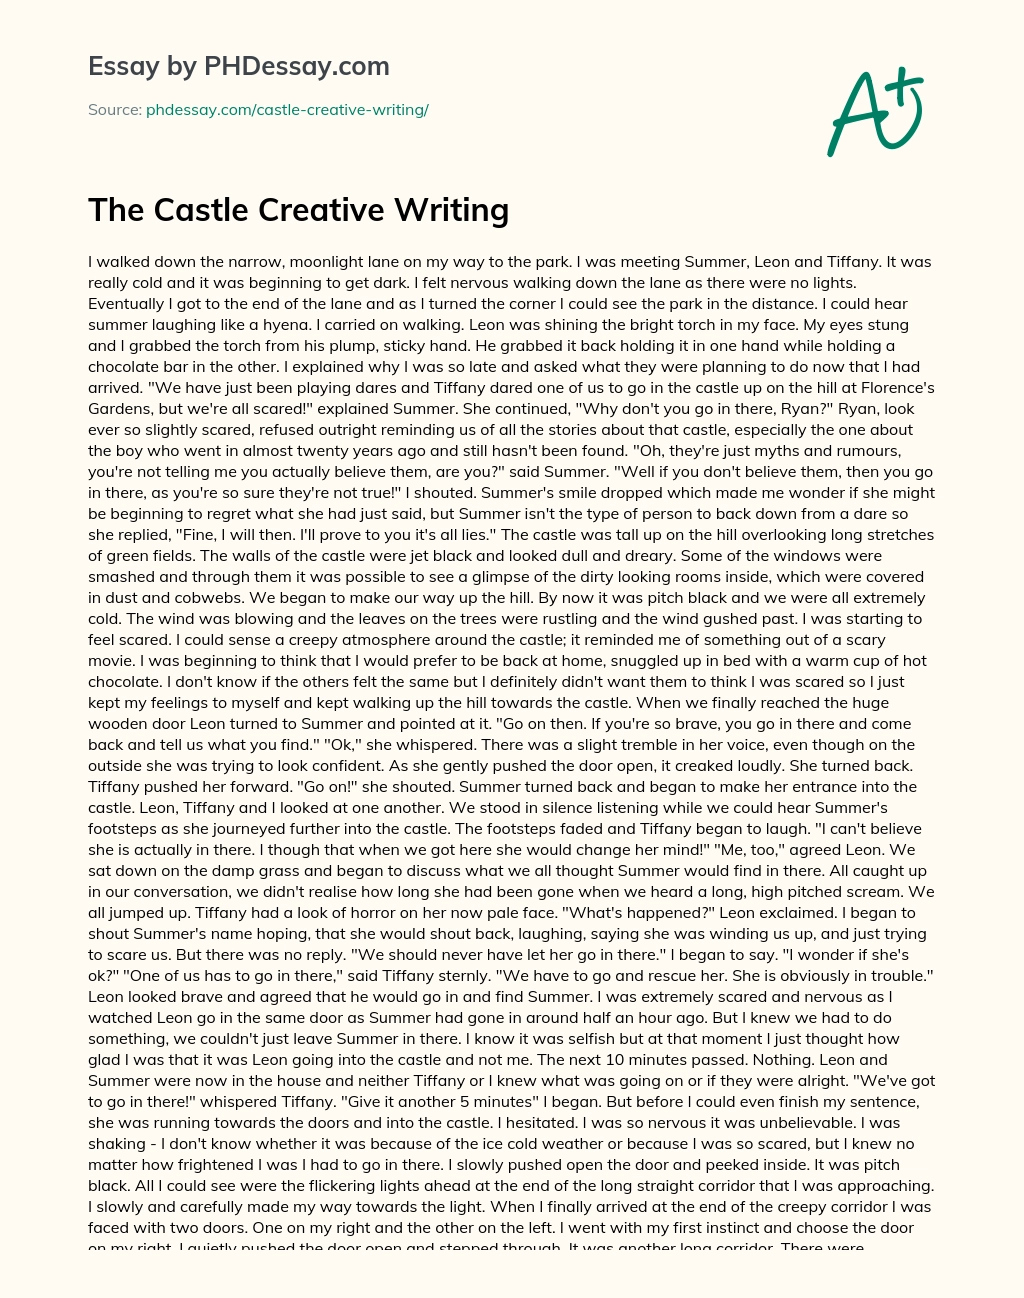 The Castle Creative Writing essay